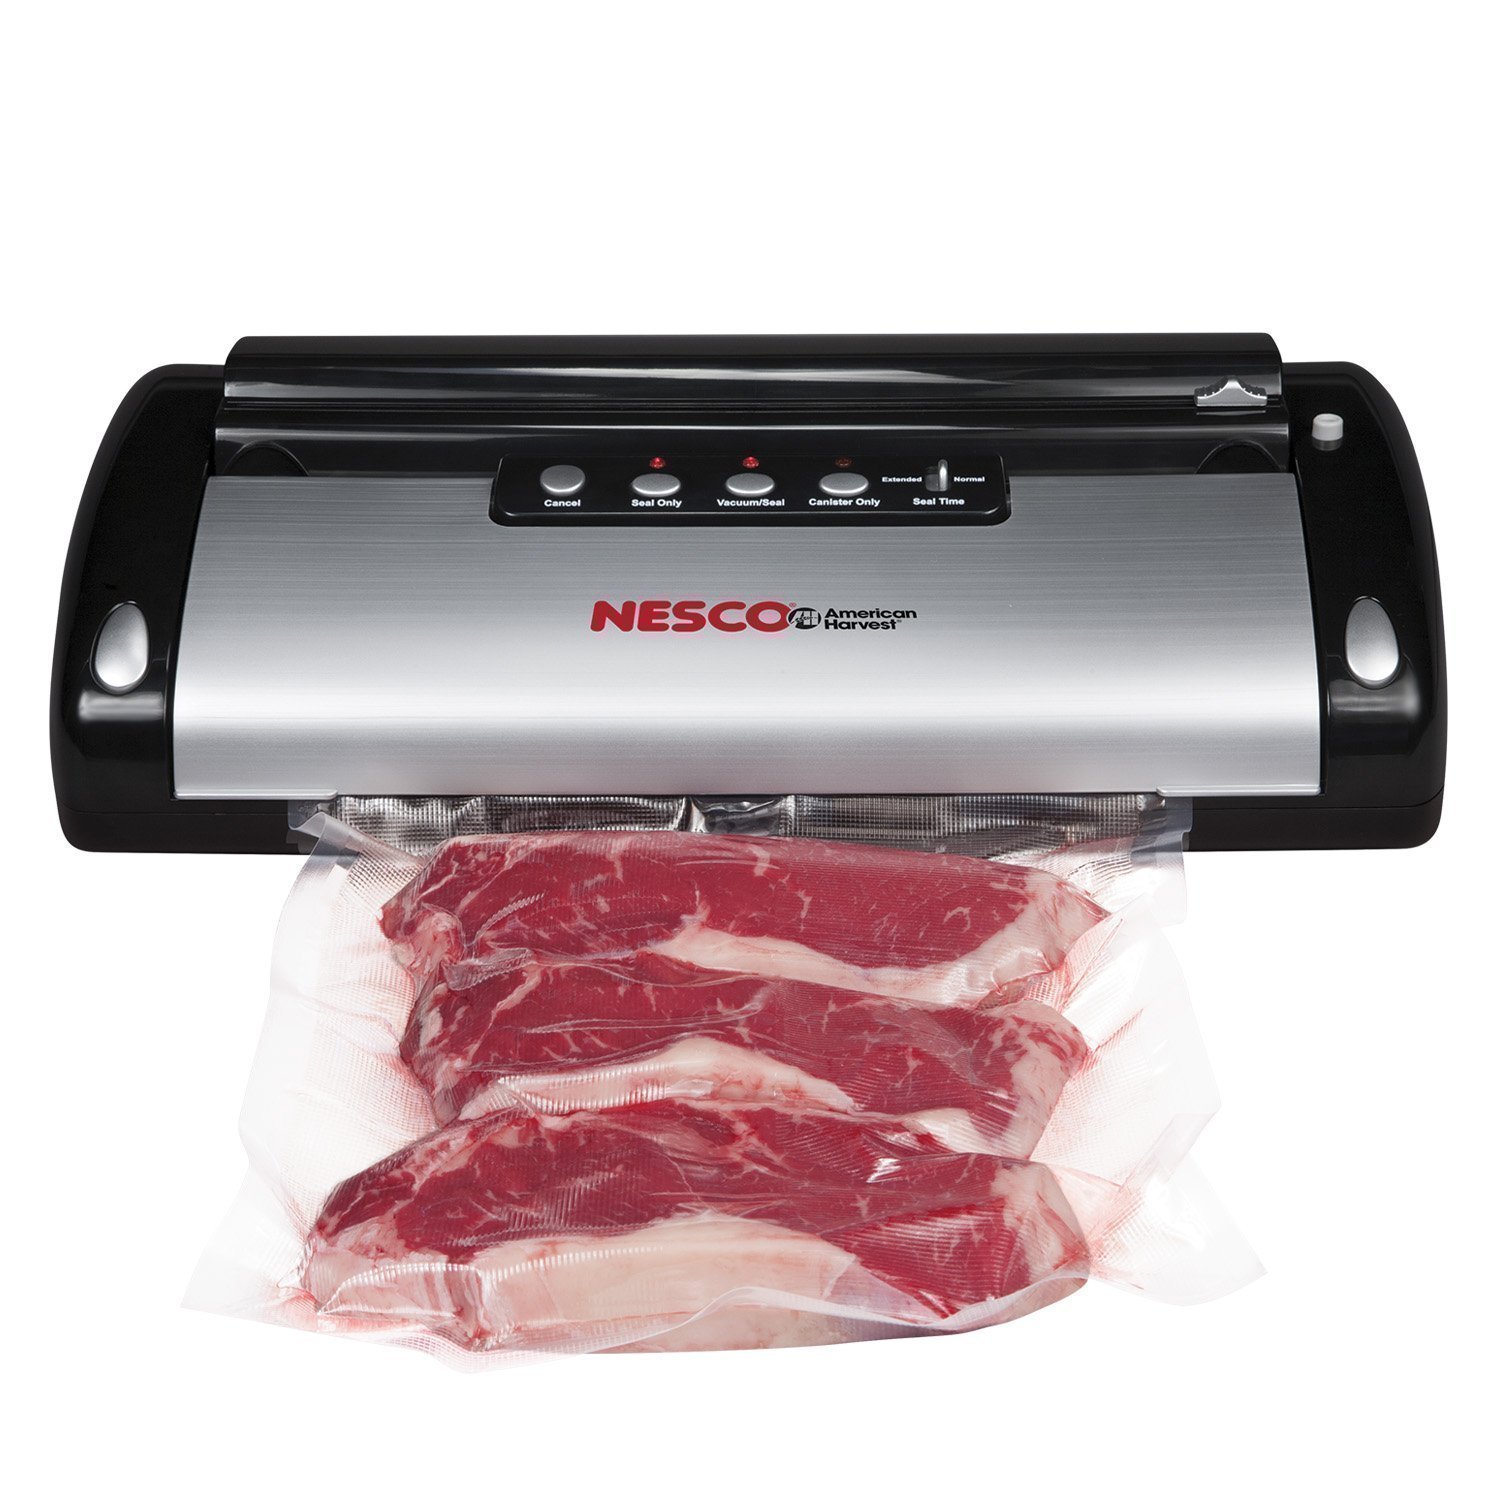 Amazon: Nesco Food Vacuum Sealing System with Starter Kit $38